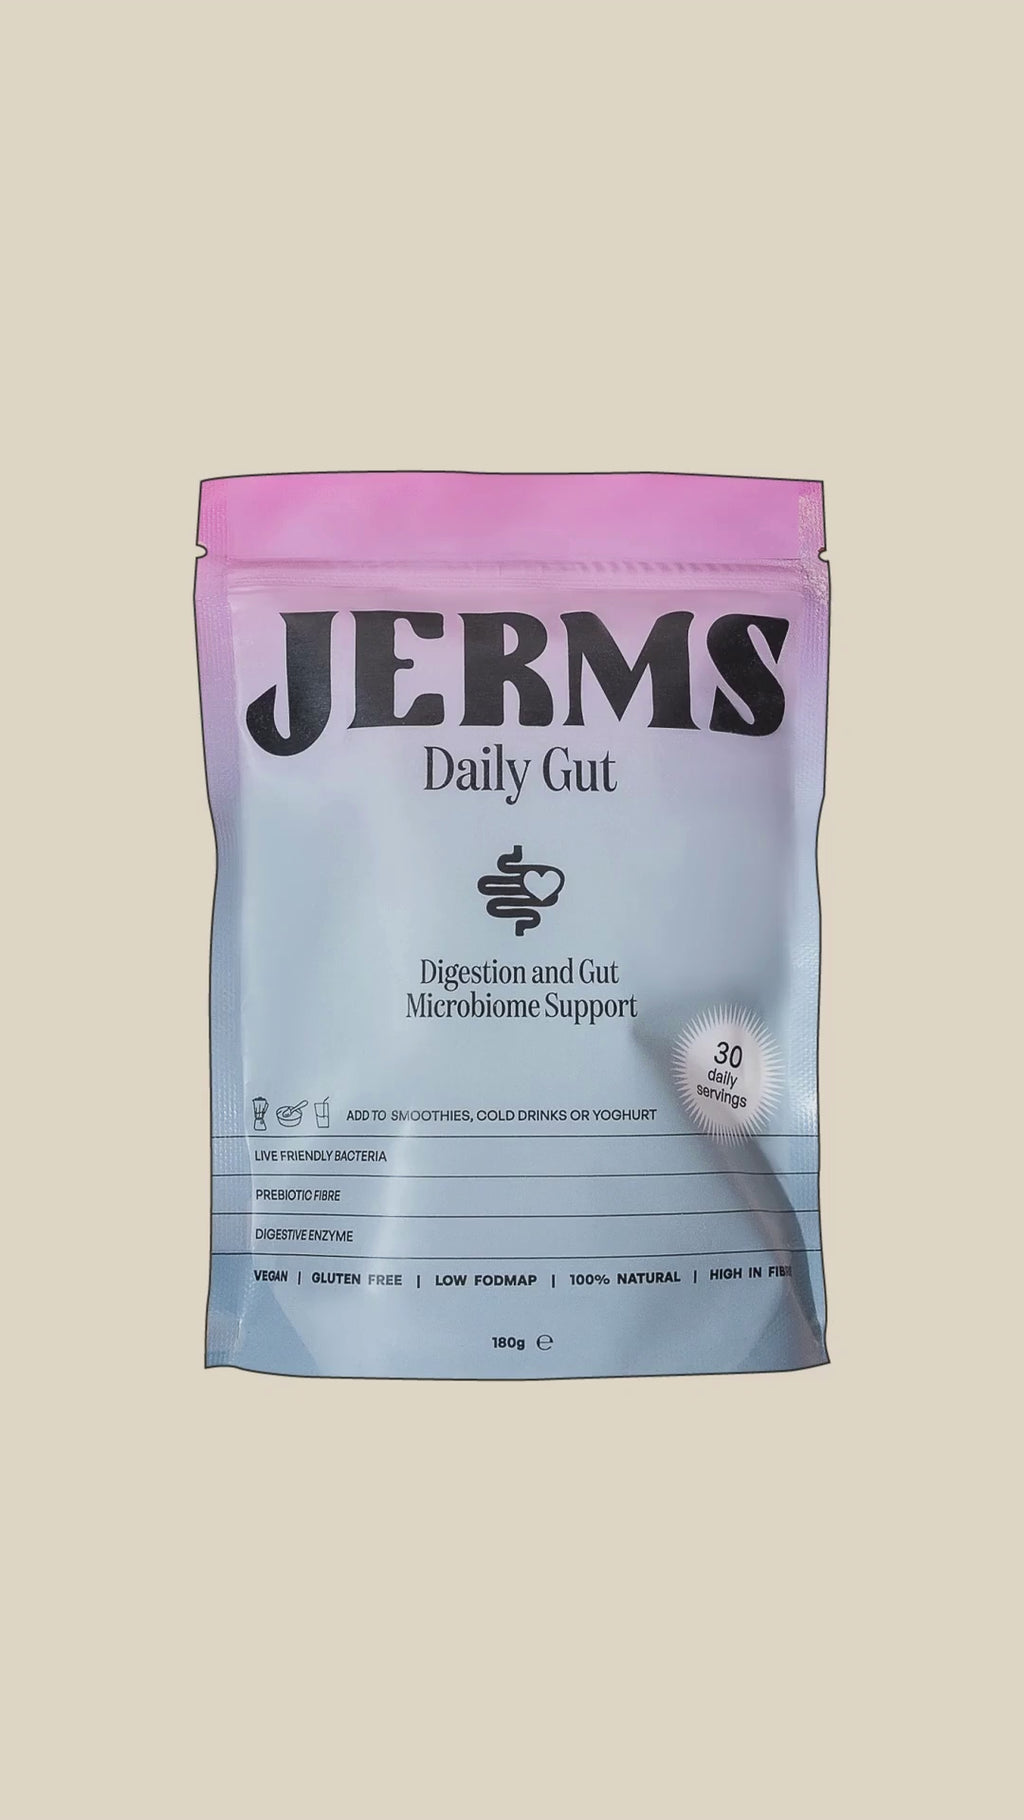 JERMS Daily Gut probiotics benefits